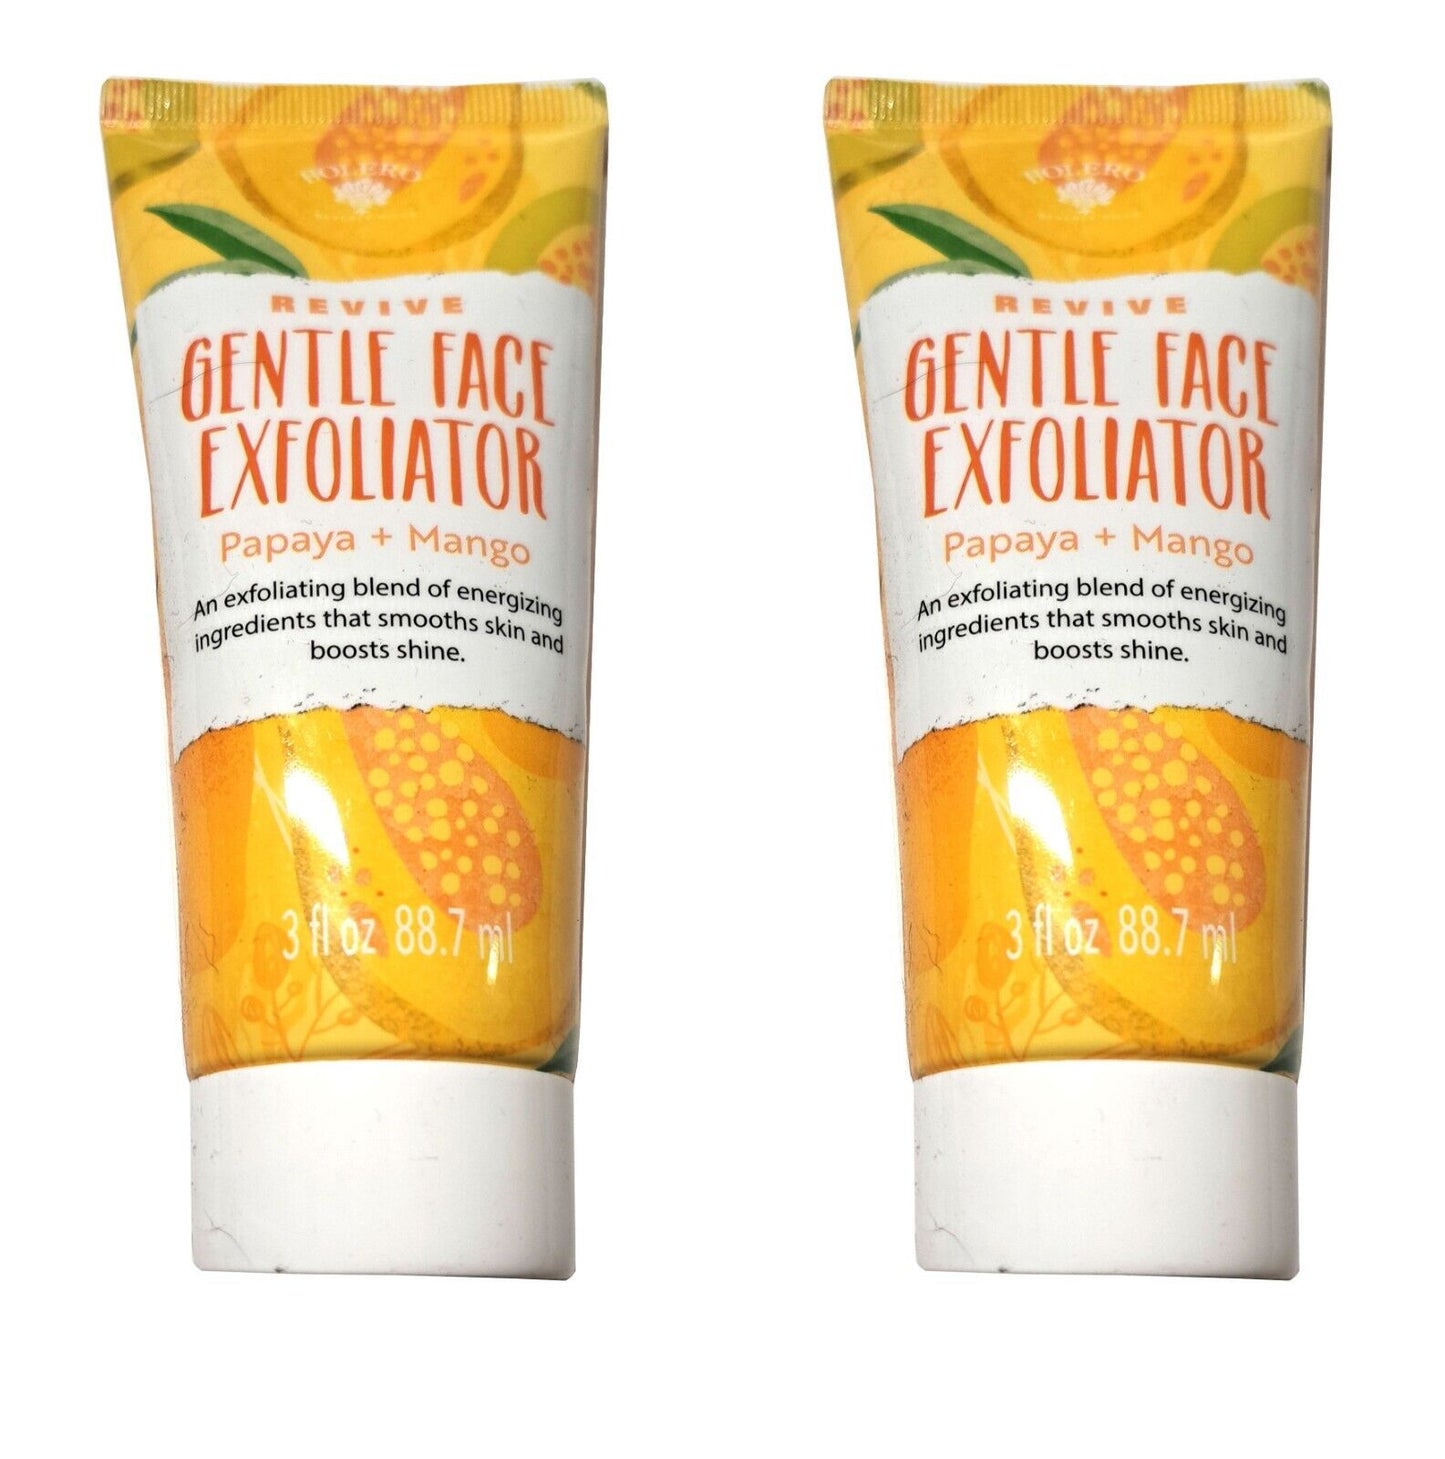 Bolero Revive Gentle Face Exfoliator - Papaya & Mango 3fl oz (88.7ml) (Set of 2)